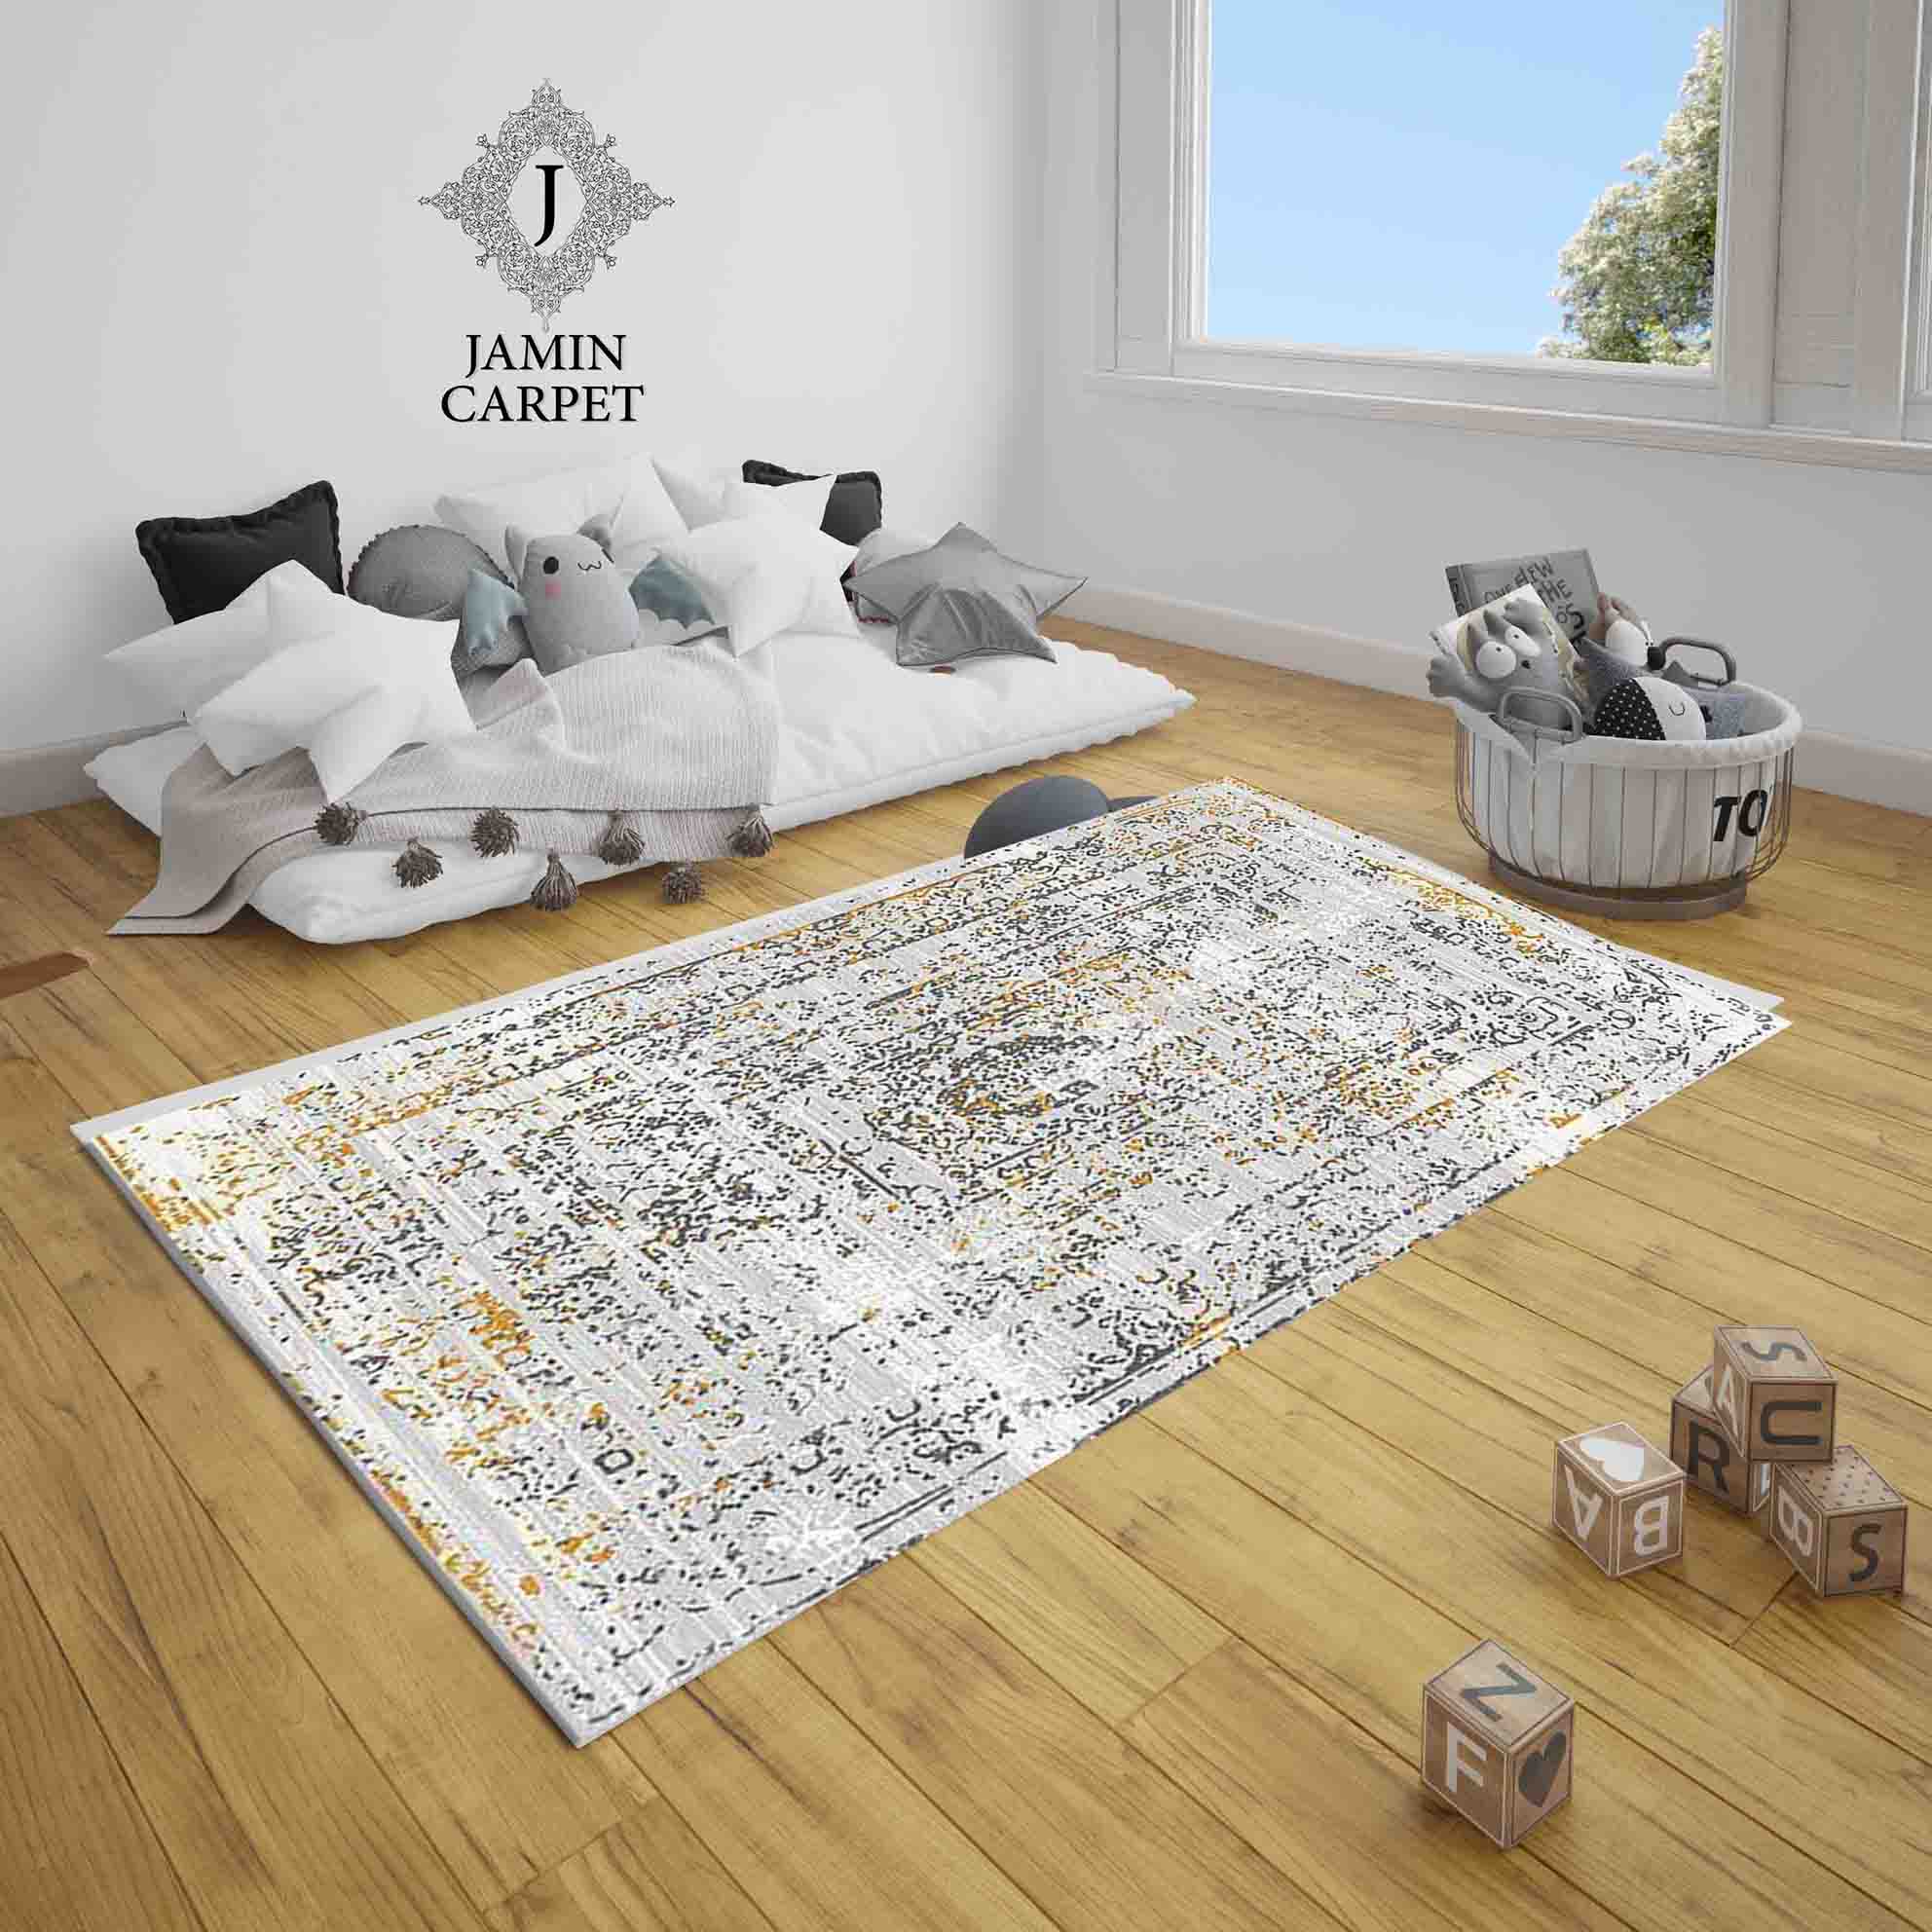 Fantasy carpet, code 274, comb 400, density 1800, all acrylic